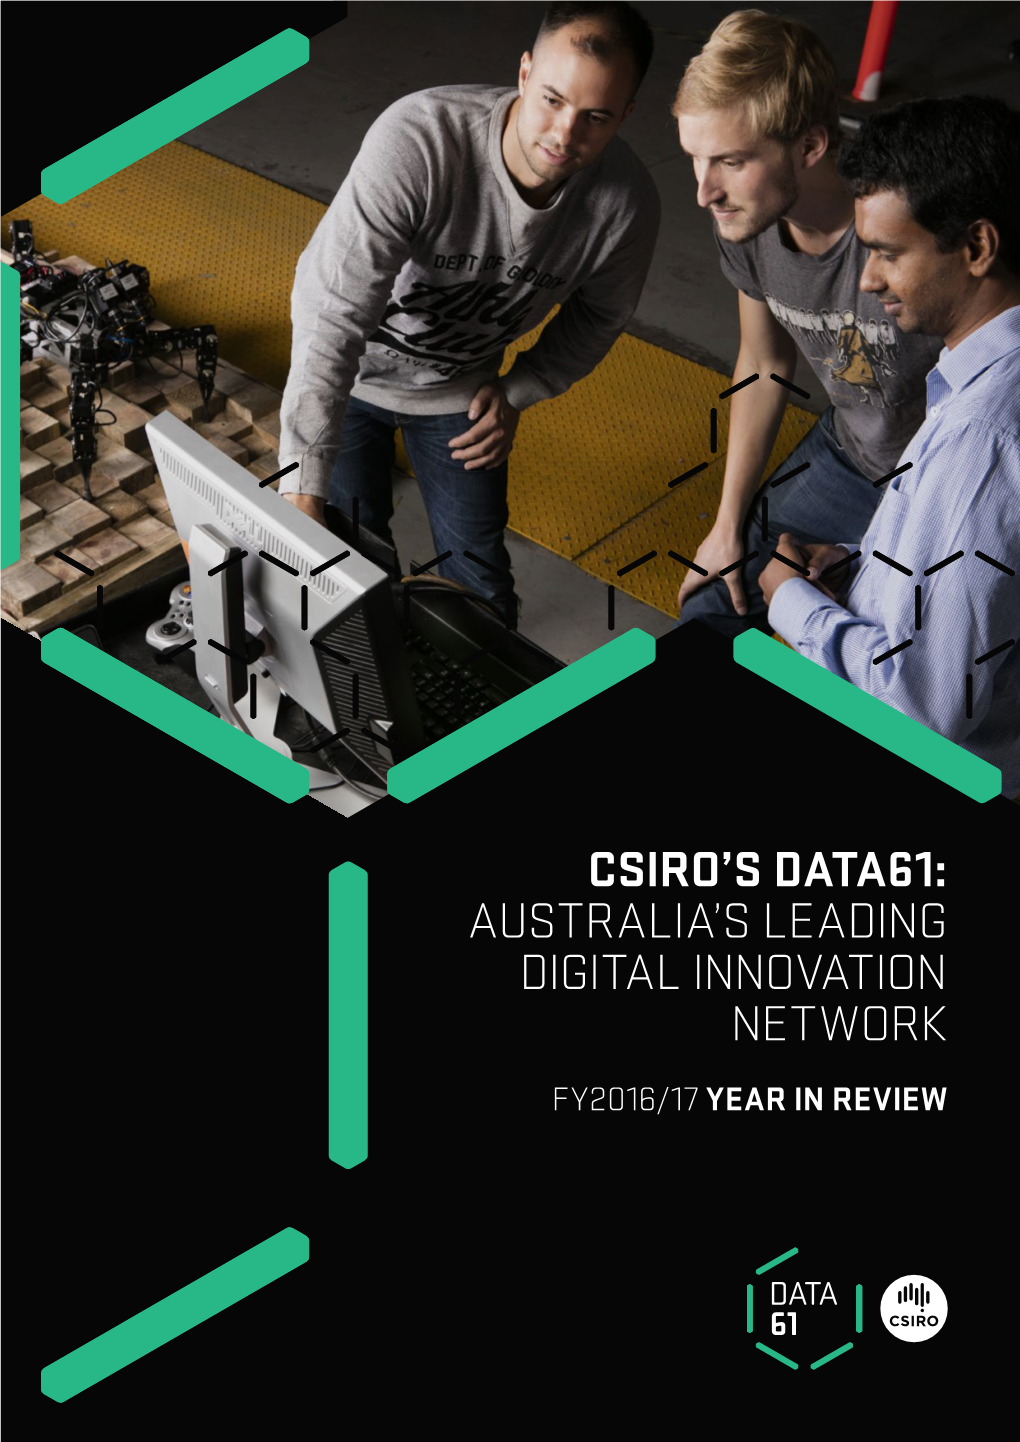 Csiro's Data61: Australia's Leading Digital Innovation Network